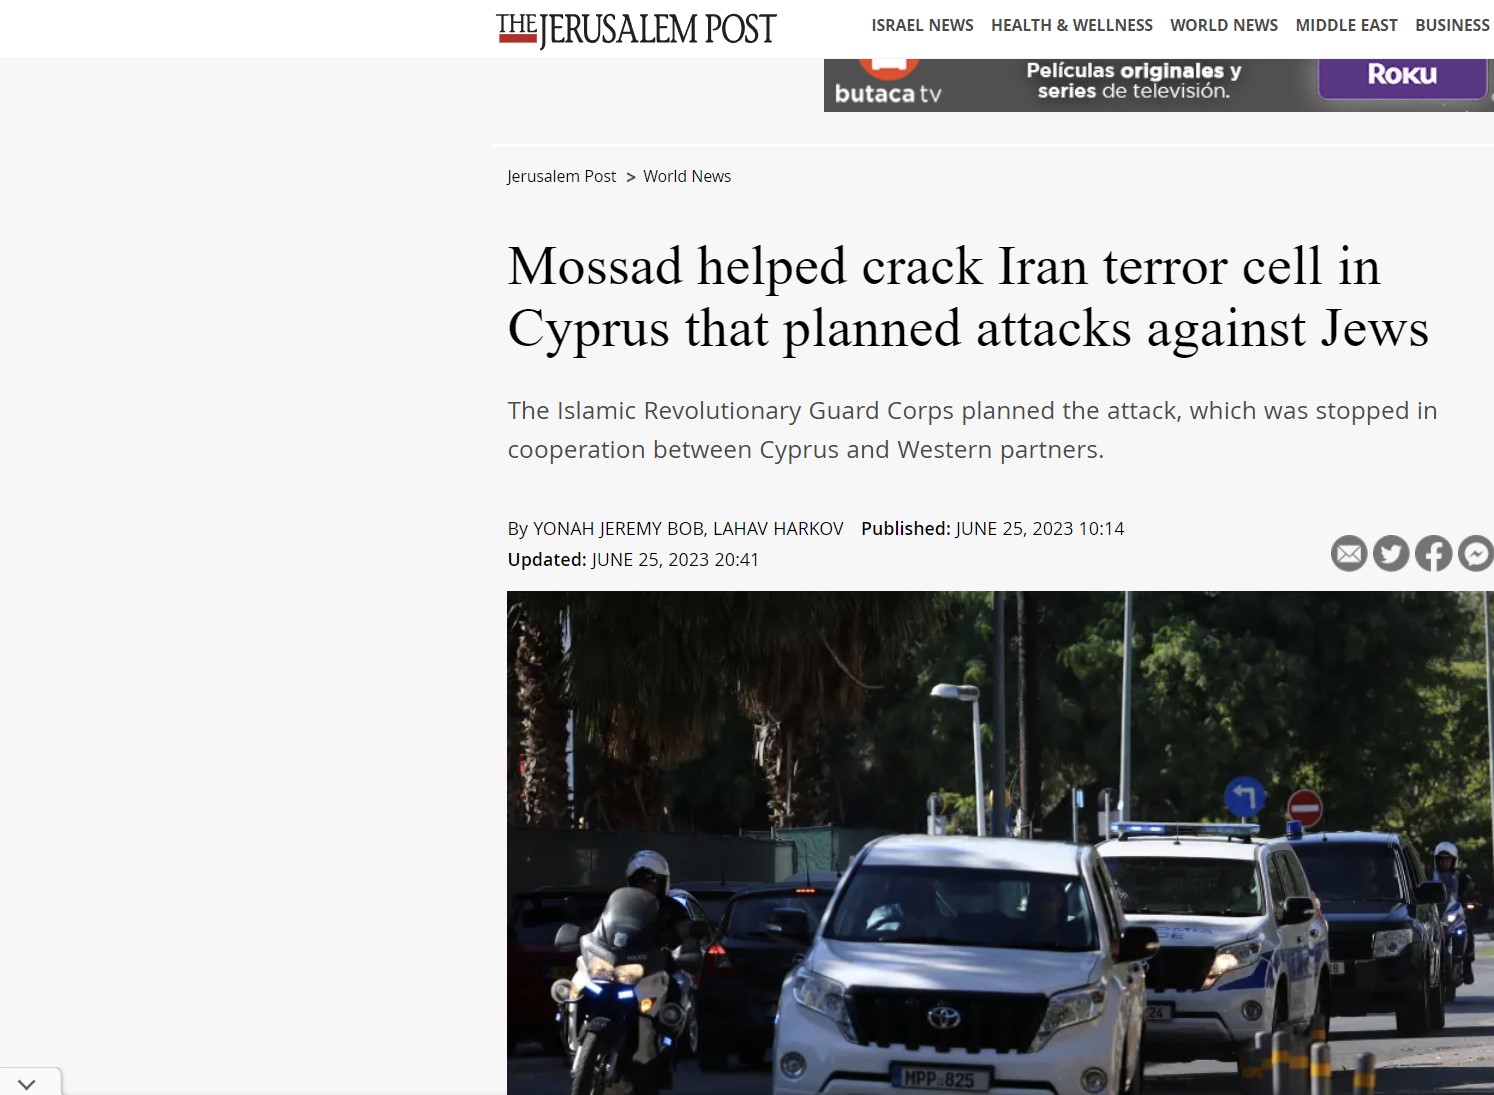 Jerusalem Post: Η Μοσάντ βοήθησε στην εξάρθρωση τρομοκρατικής ομάδας του Ιράν στην Κύπρο που σχεδίαζε επιθέσεις εναντίον Εβραίων